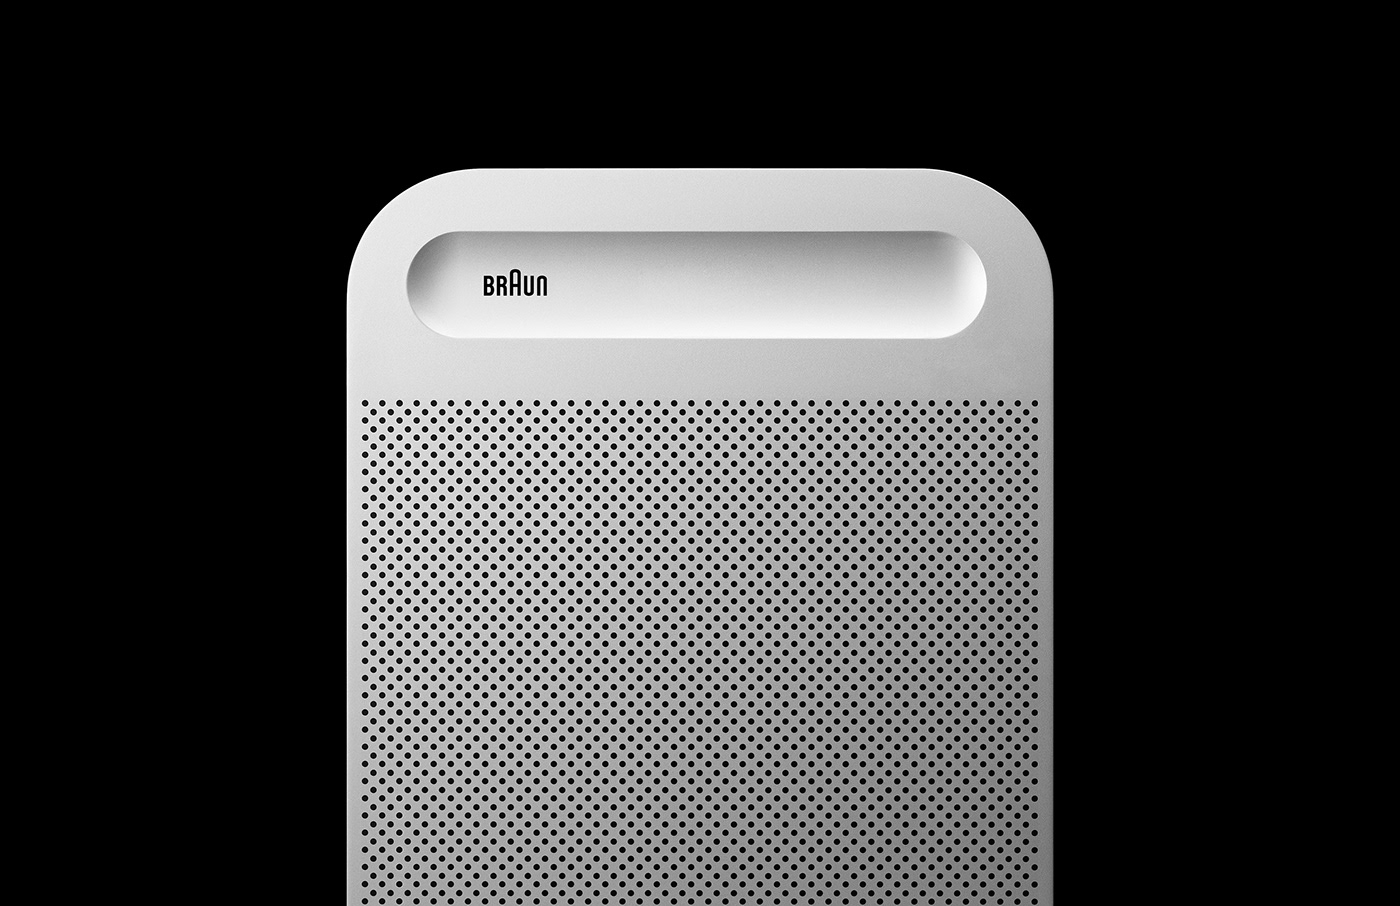 Braun Dieter Rams Speaker designed by designer Kim Seungwoo of industrial design studio VLND.